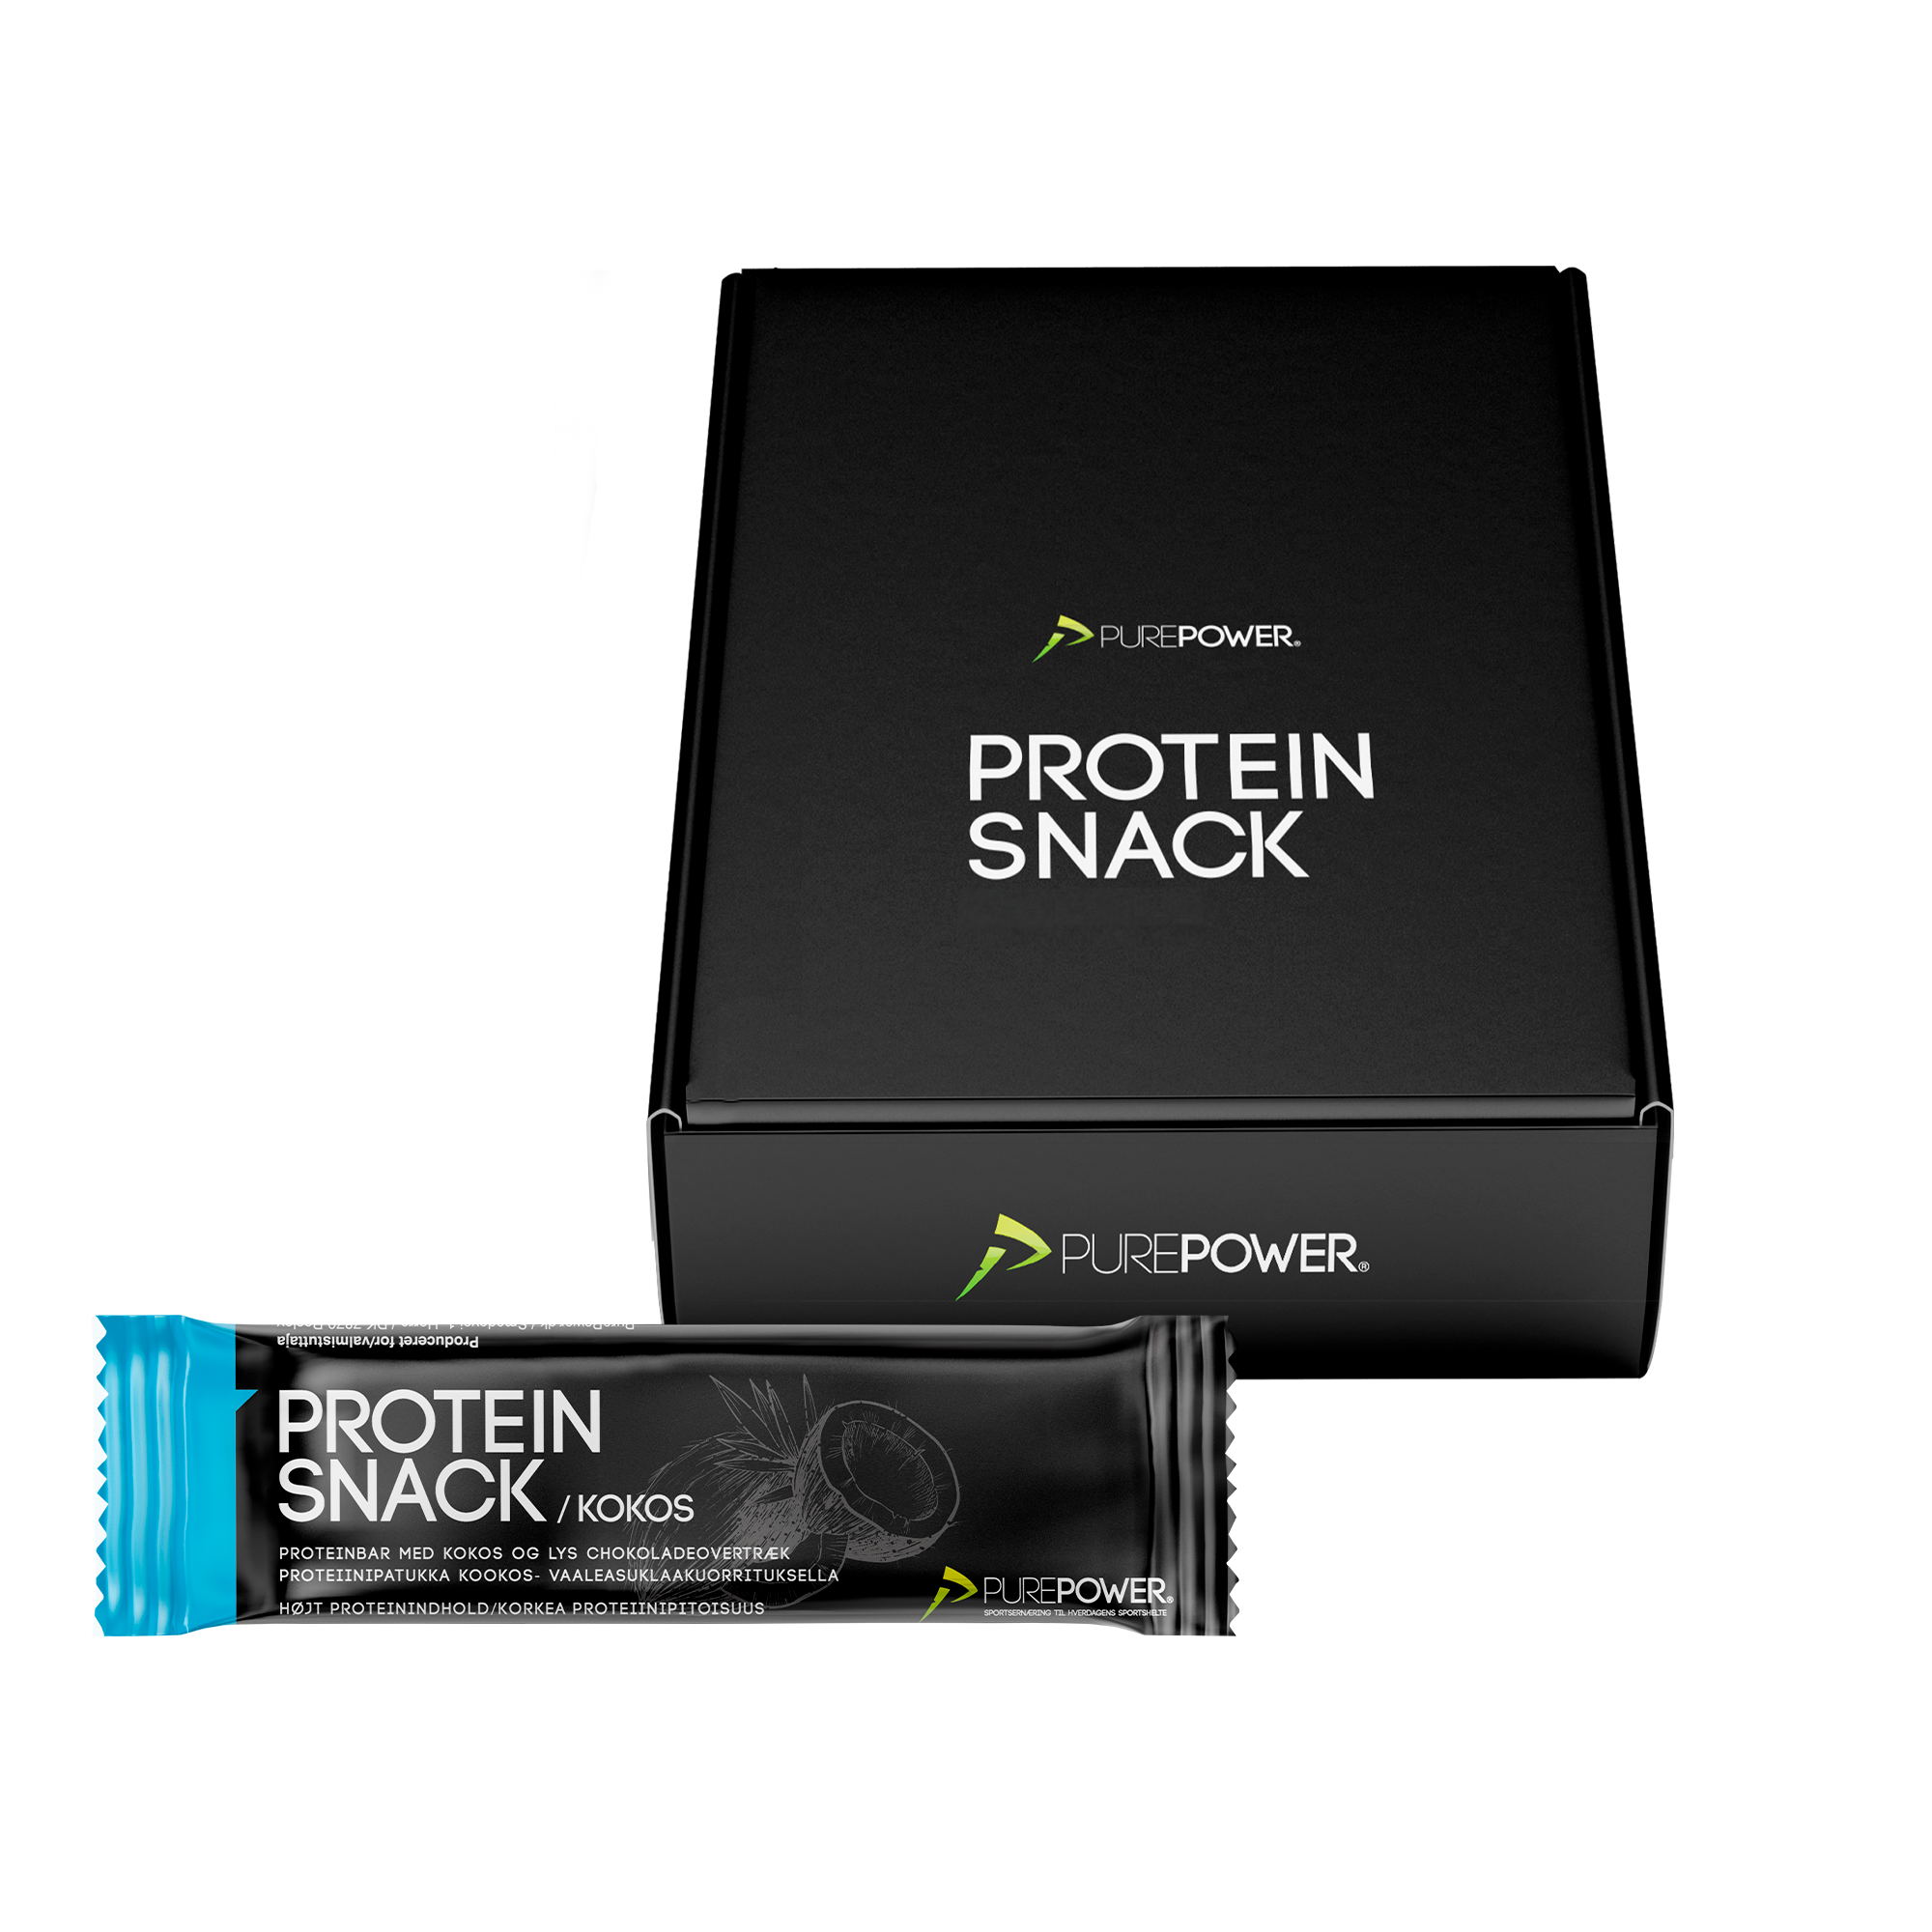 Fitnessudstyr? PurePower Protein Snack Kokos - den perfekte proteinrige snack med himmelsk smag